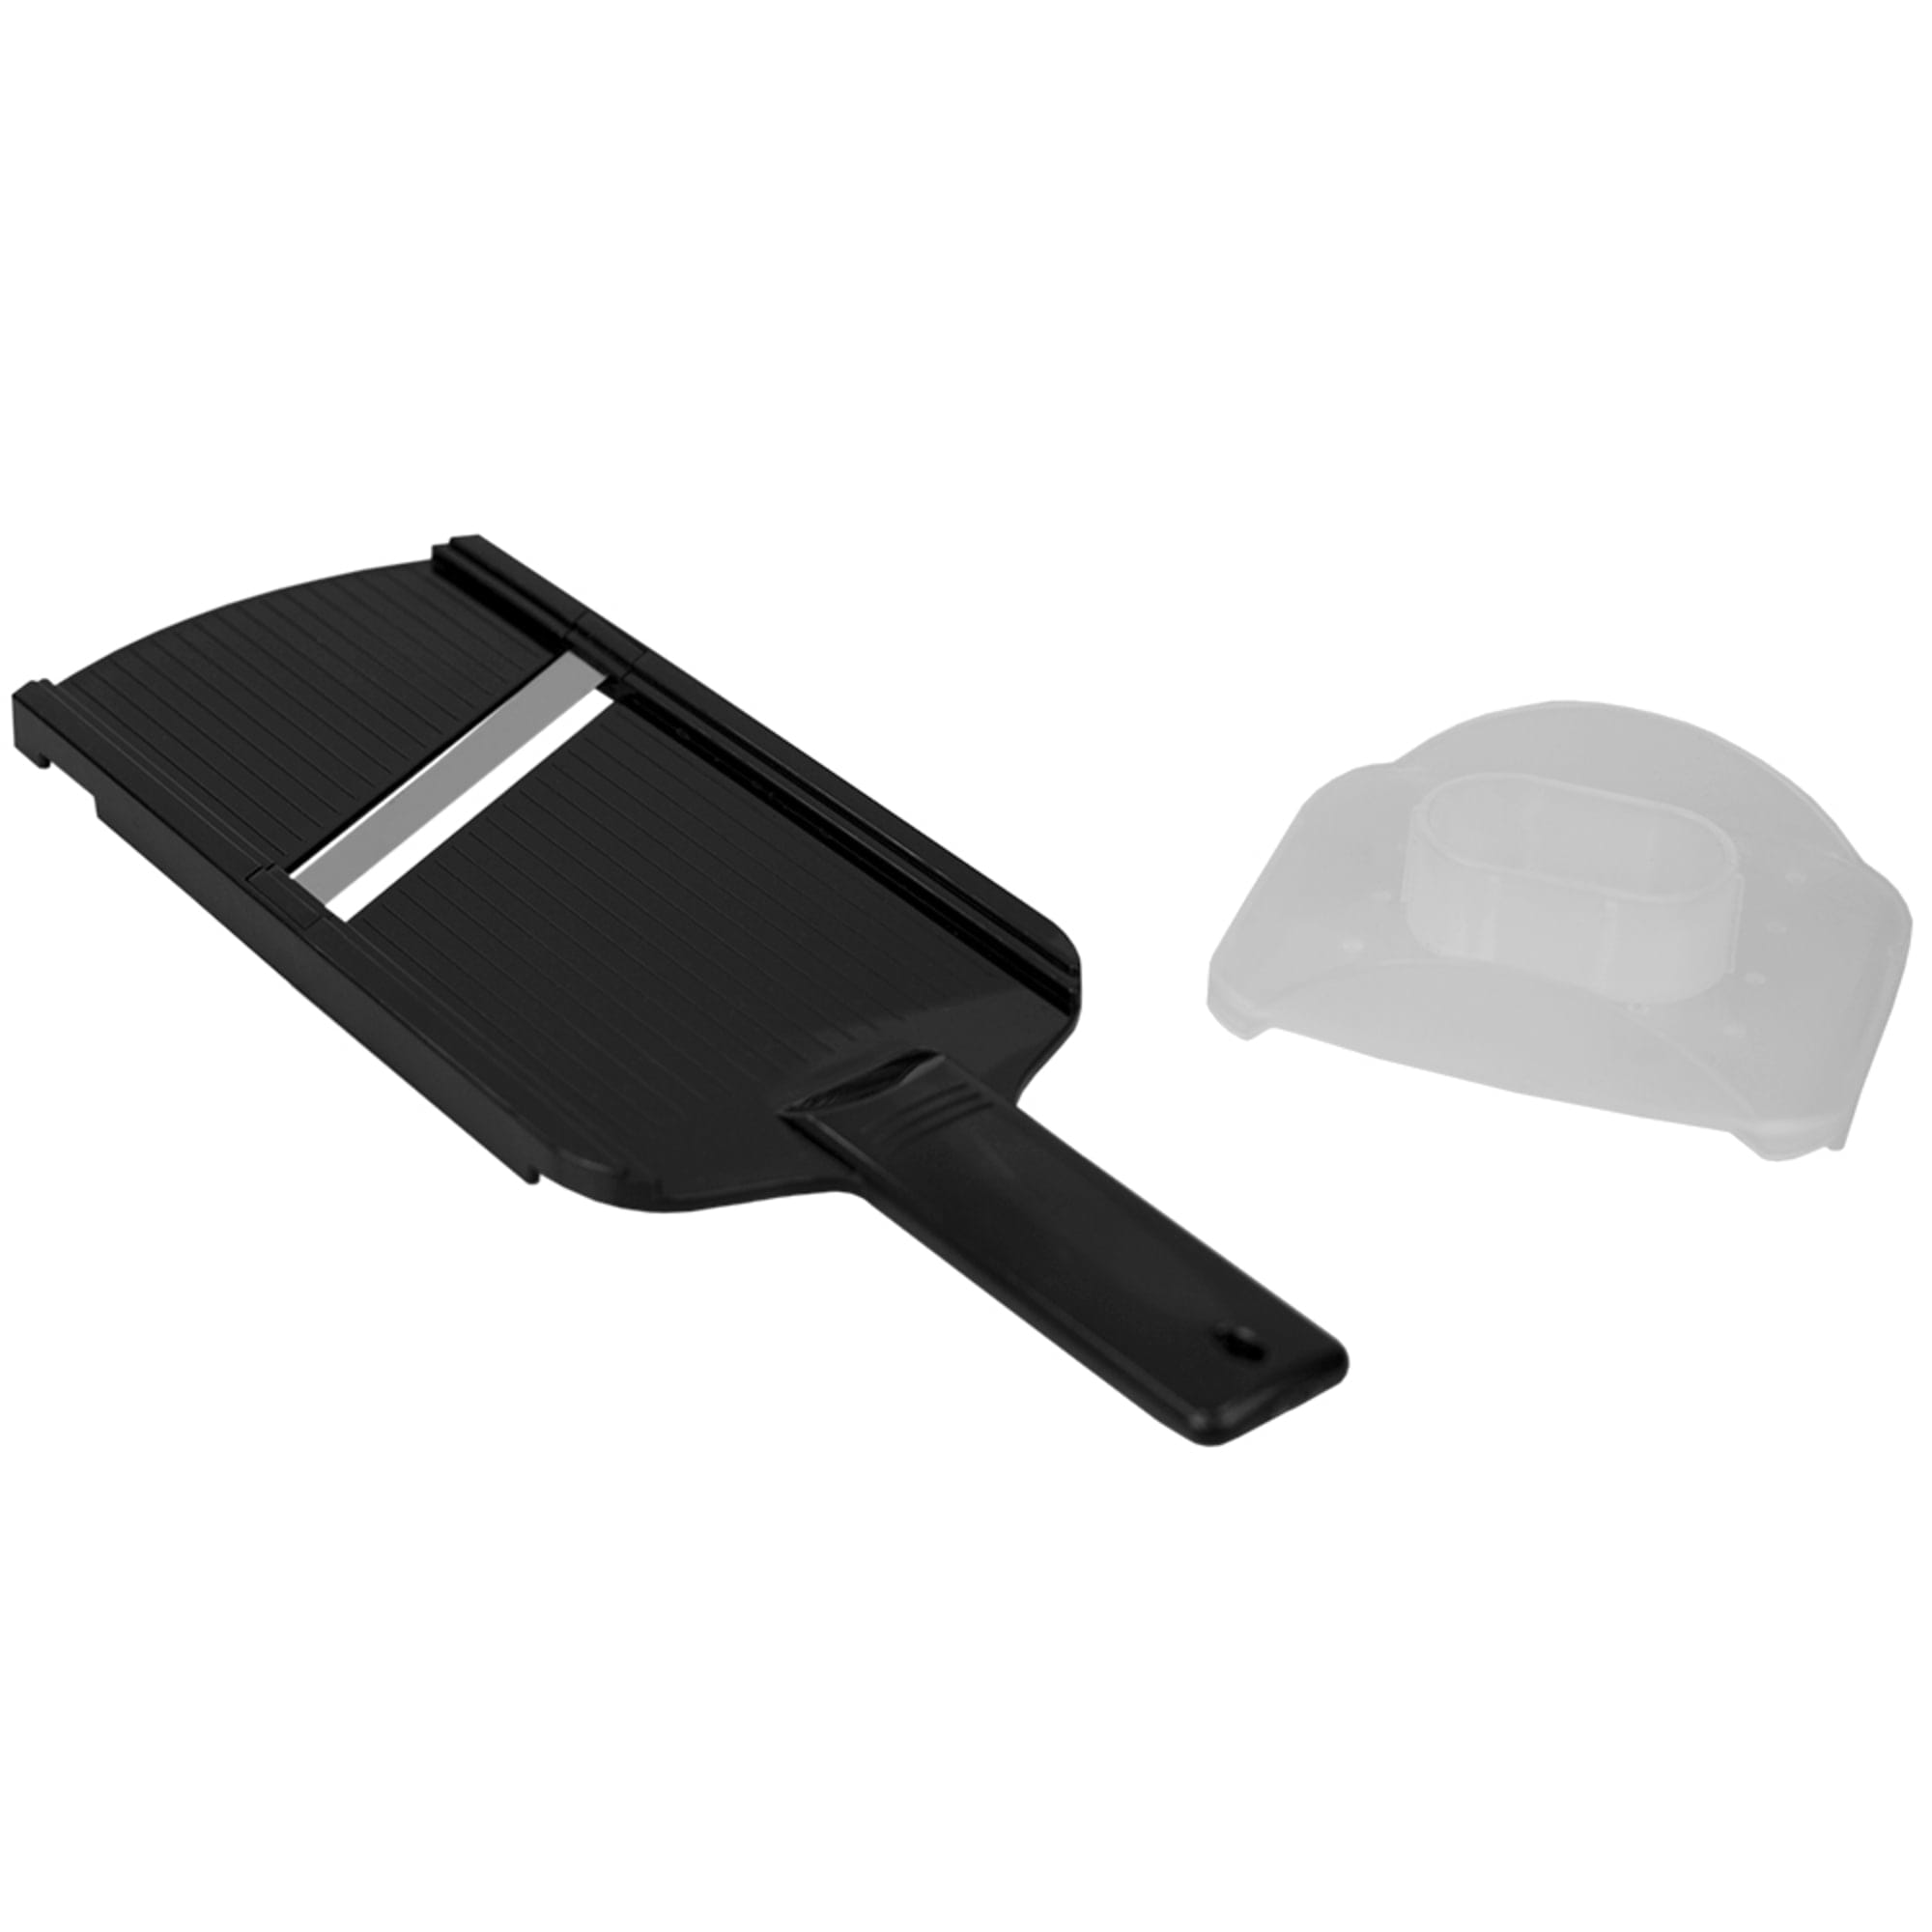 Home Basics Plastic Mandolin Slicer with Handle, Black $4.00 EACH, CASE PACK OF 24